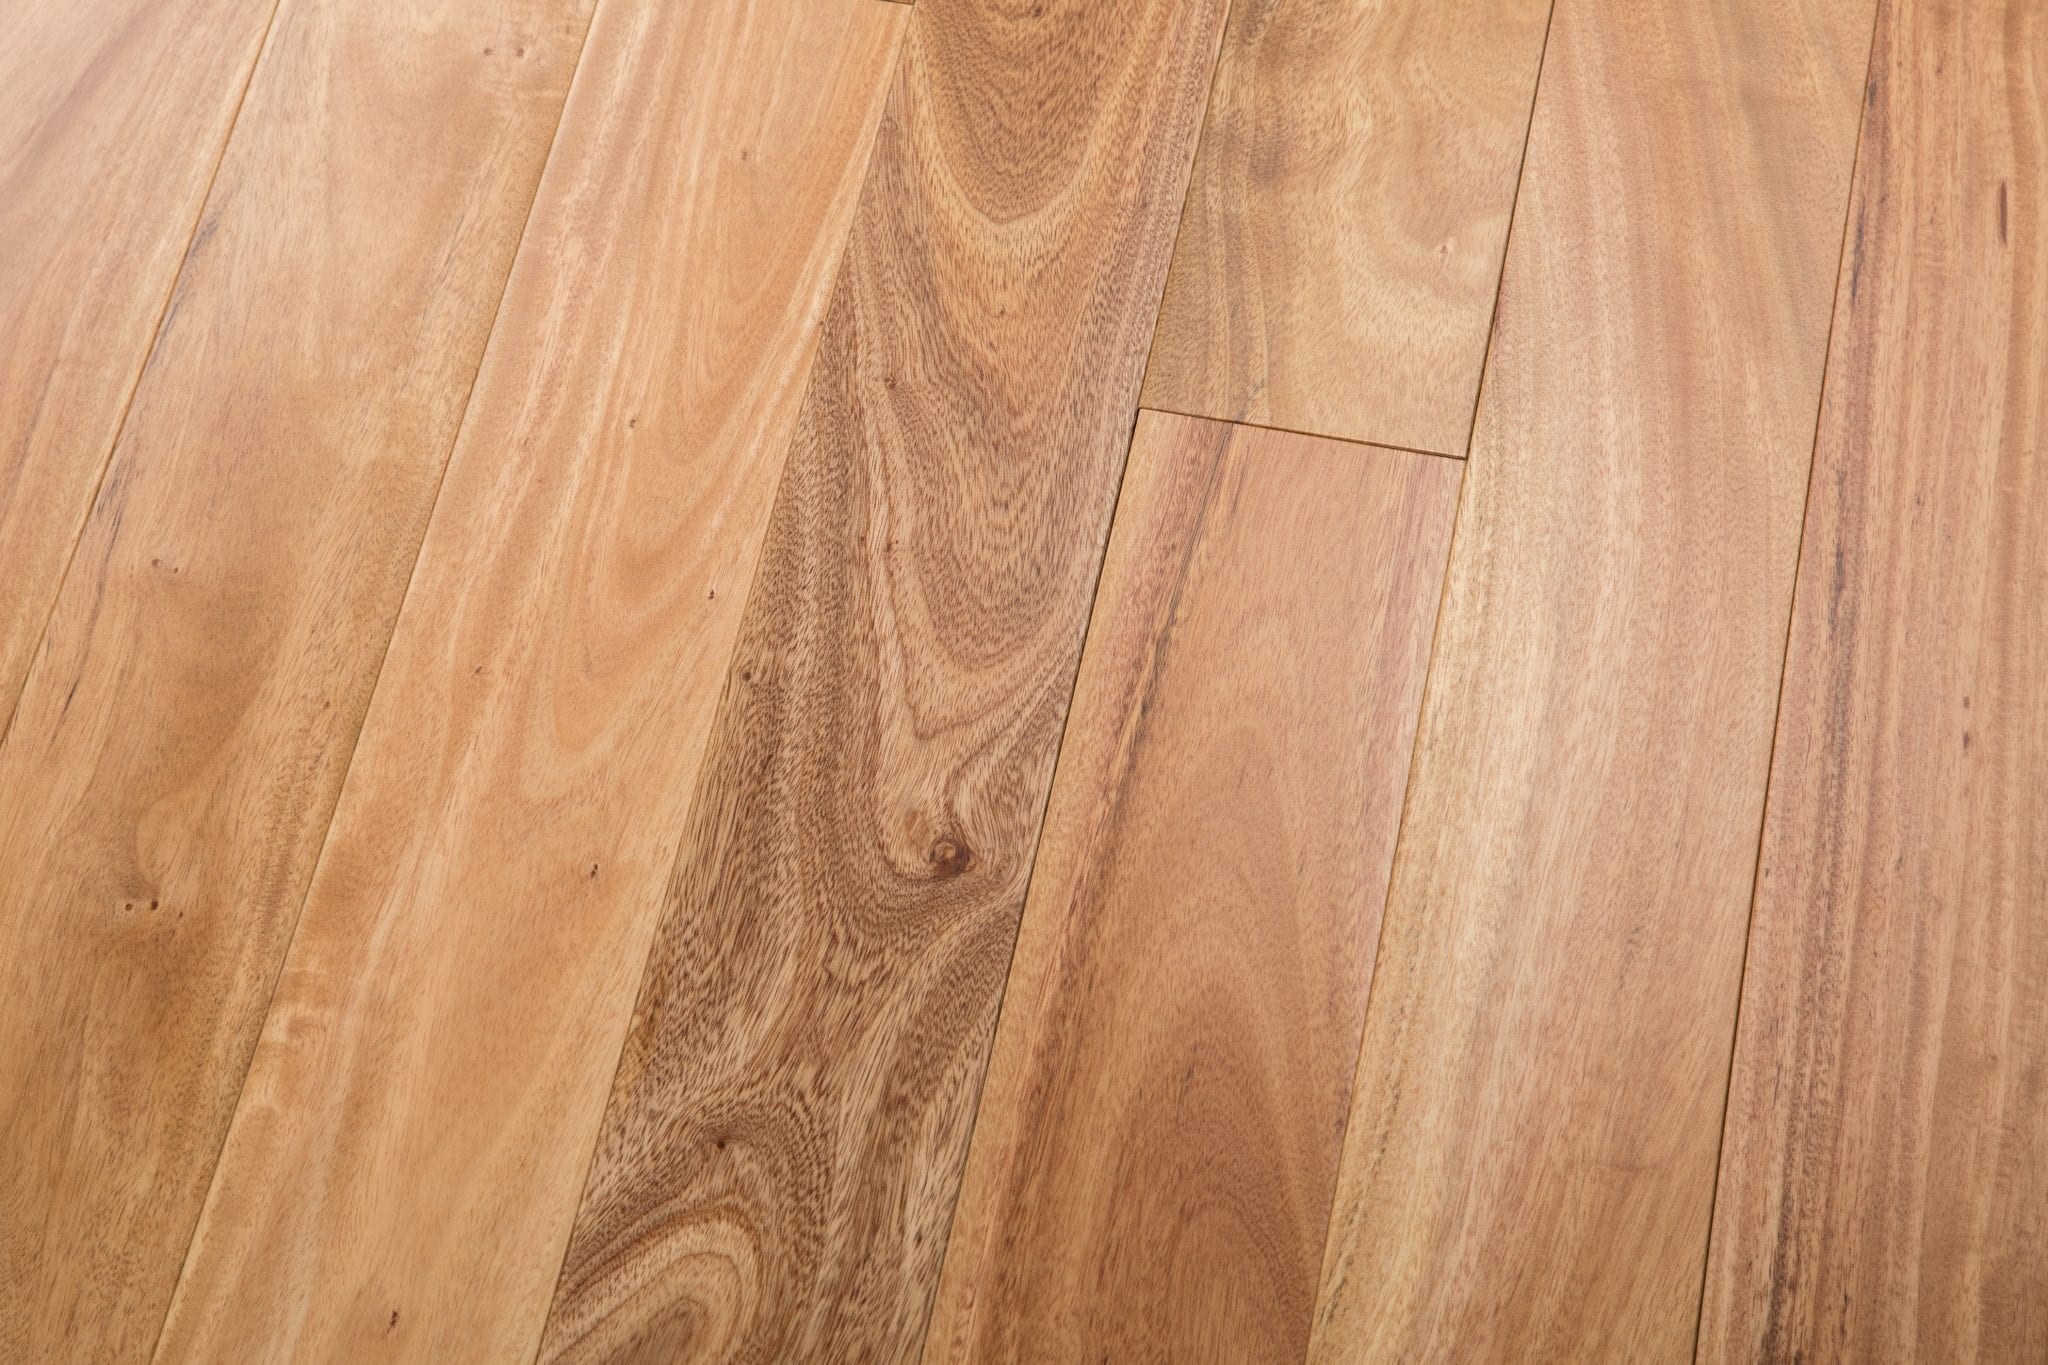 Solid Hardwood Flooring, Amendoim Hardwood Flooring Reviews